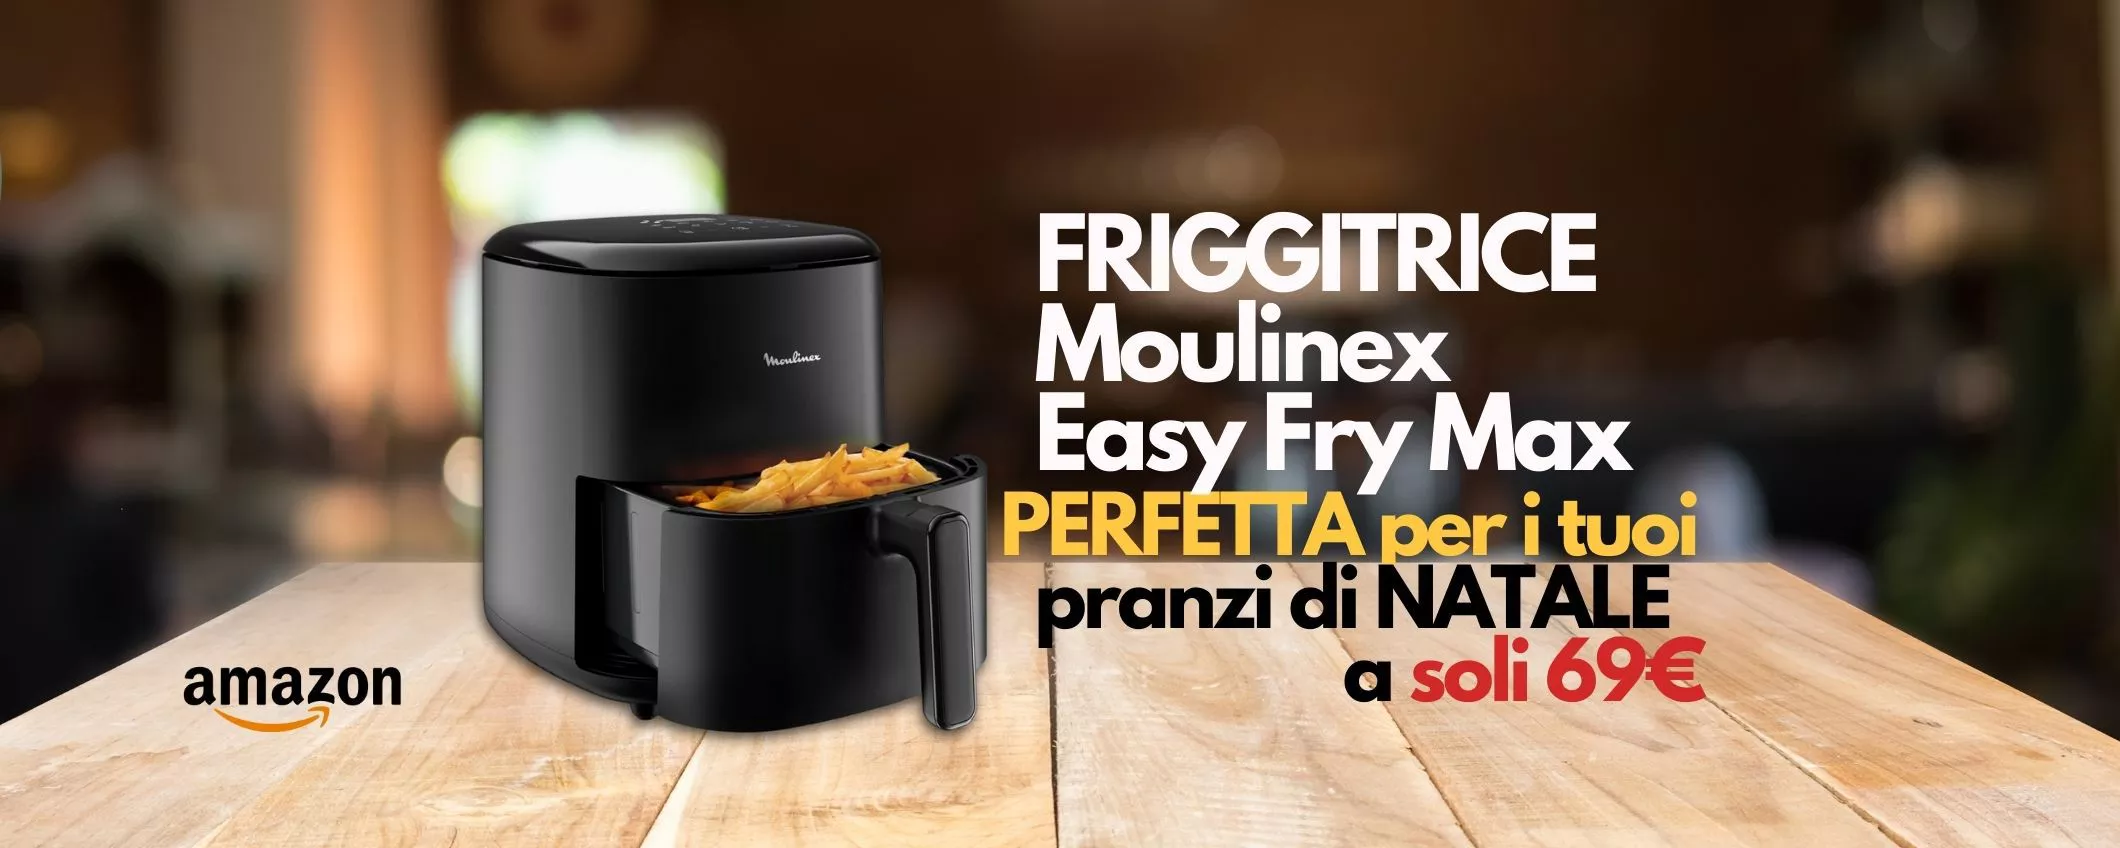 FRIGGITRICE Moulinex digitale Easy Fry Max a soli 59€: offerta LAMPO  , corri - Webnews